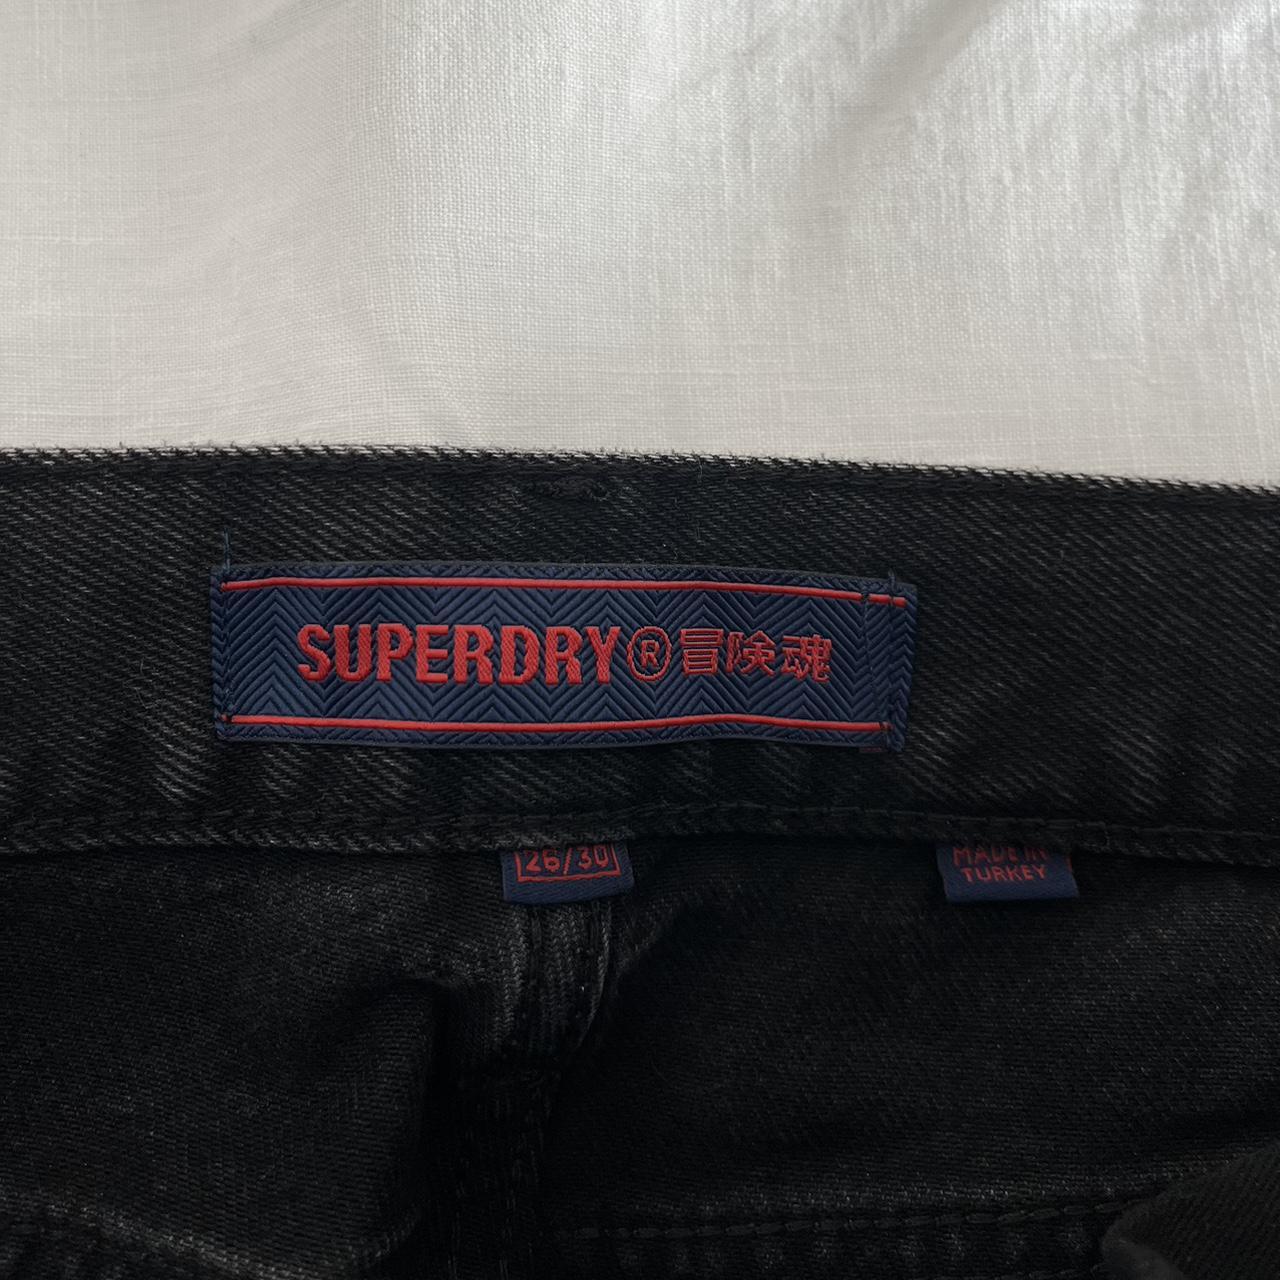 Super dry black jeans straight leg jeans, mid to... - Depop